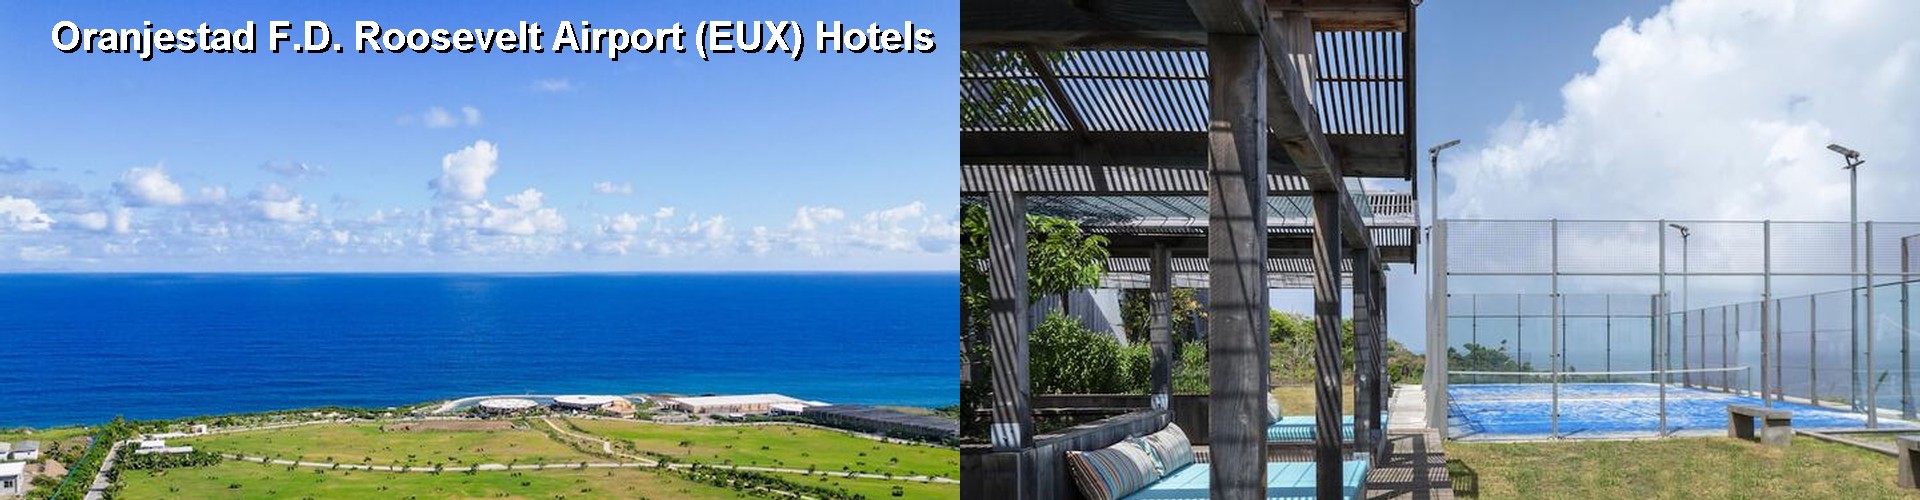 4 Best Hotels near Oranjestad F.D. Roosevelt Airport (EUX)